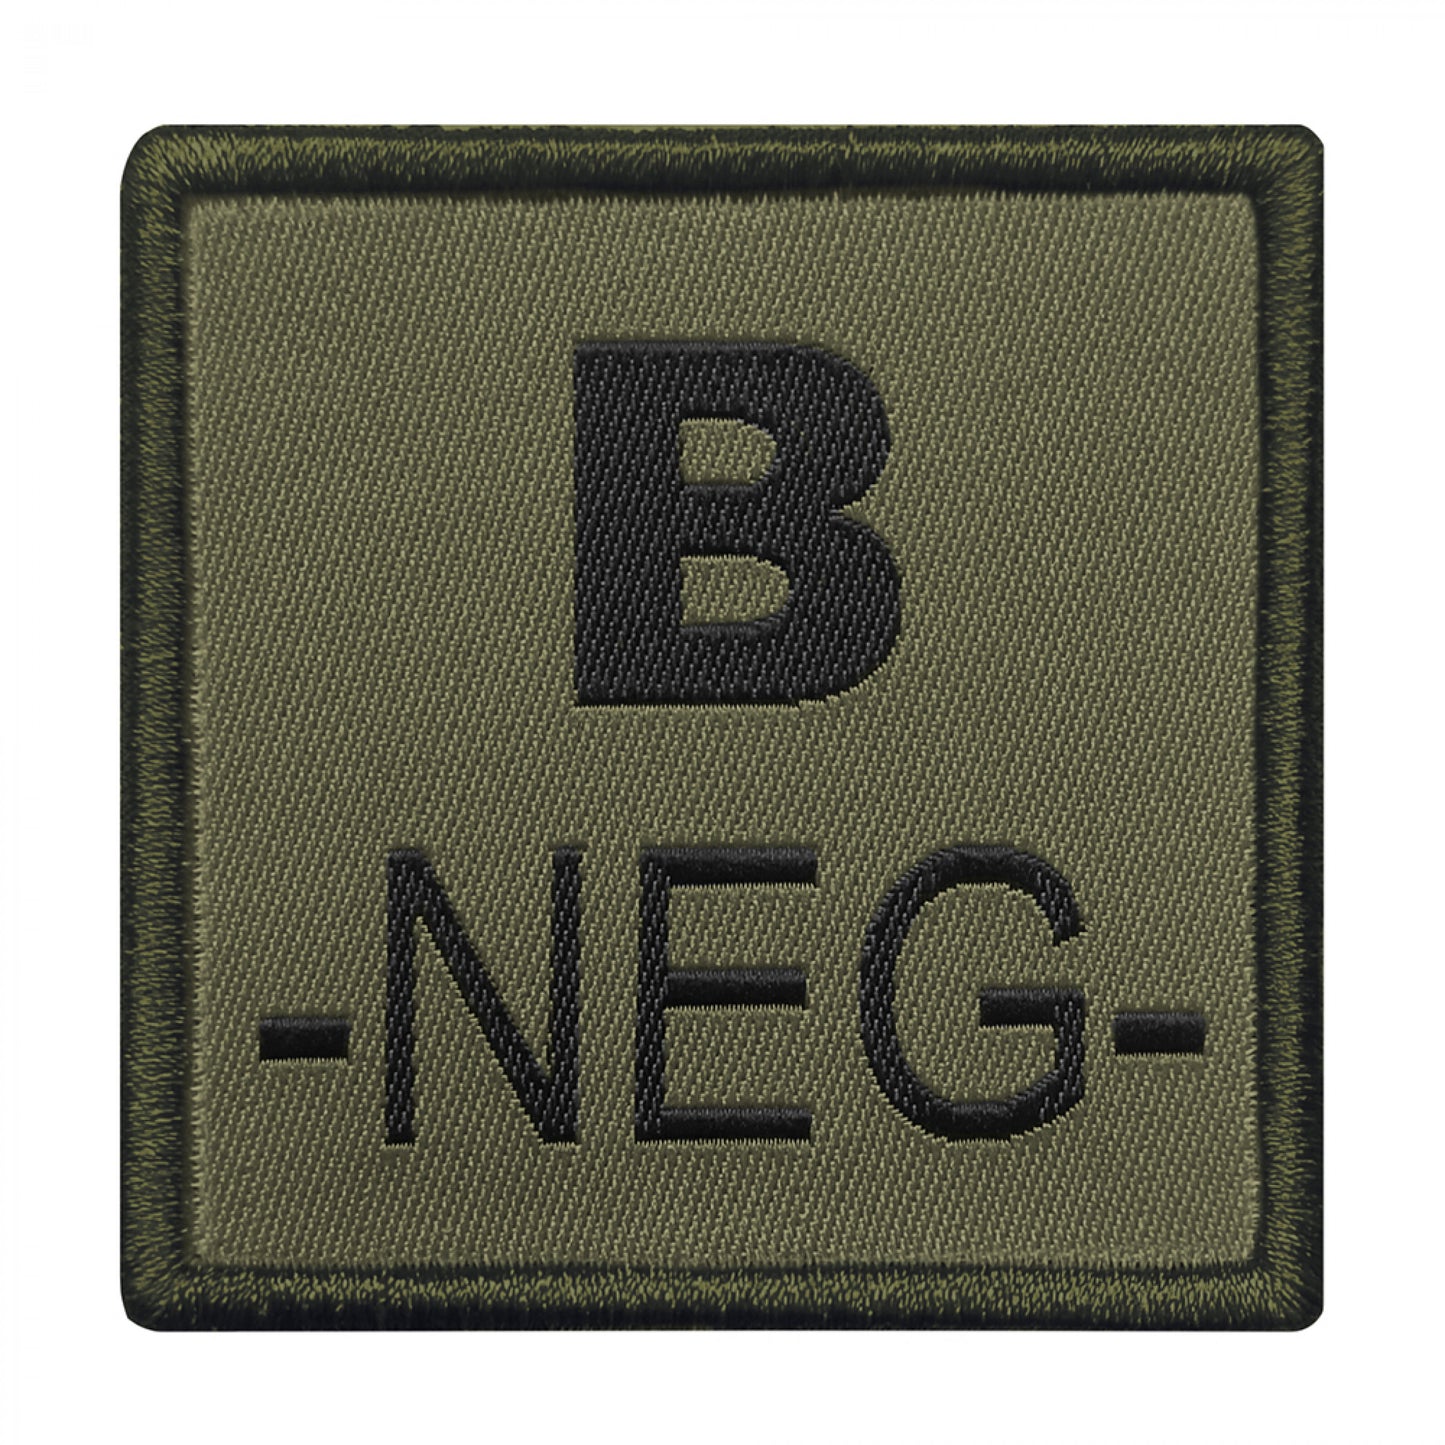 Groupe sanguin B négatif brodé sur tissu vert olive